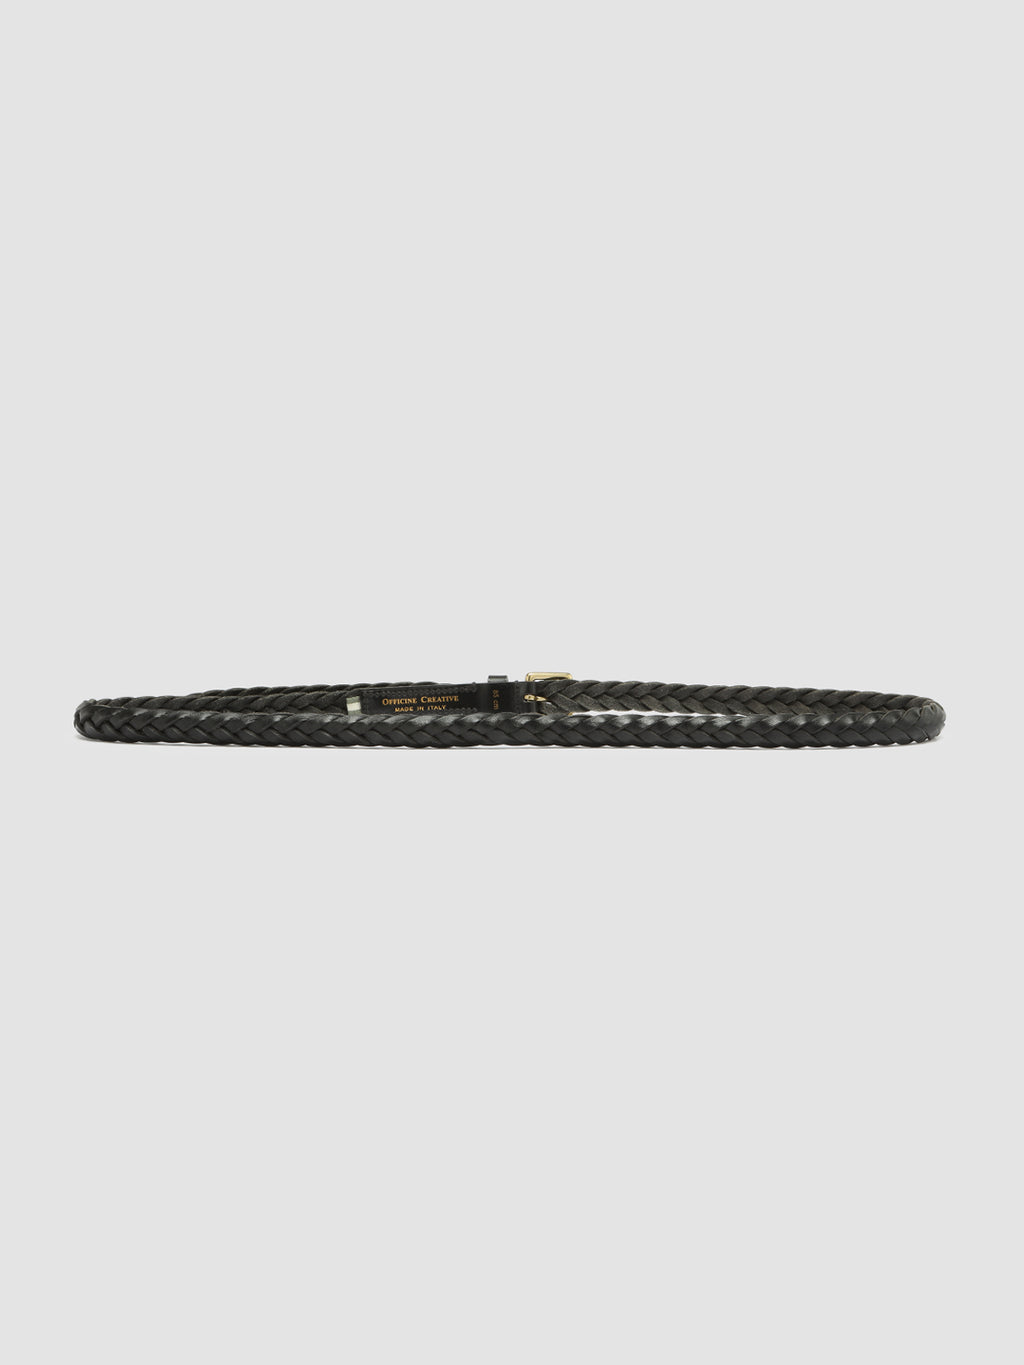 OC STRIP 064 - Black Leather Belt  Officine Creative - 3